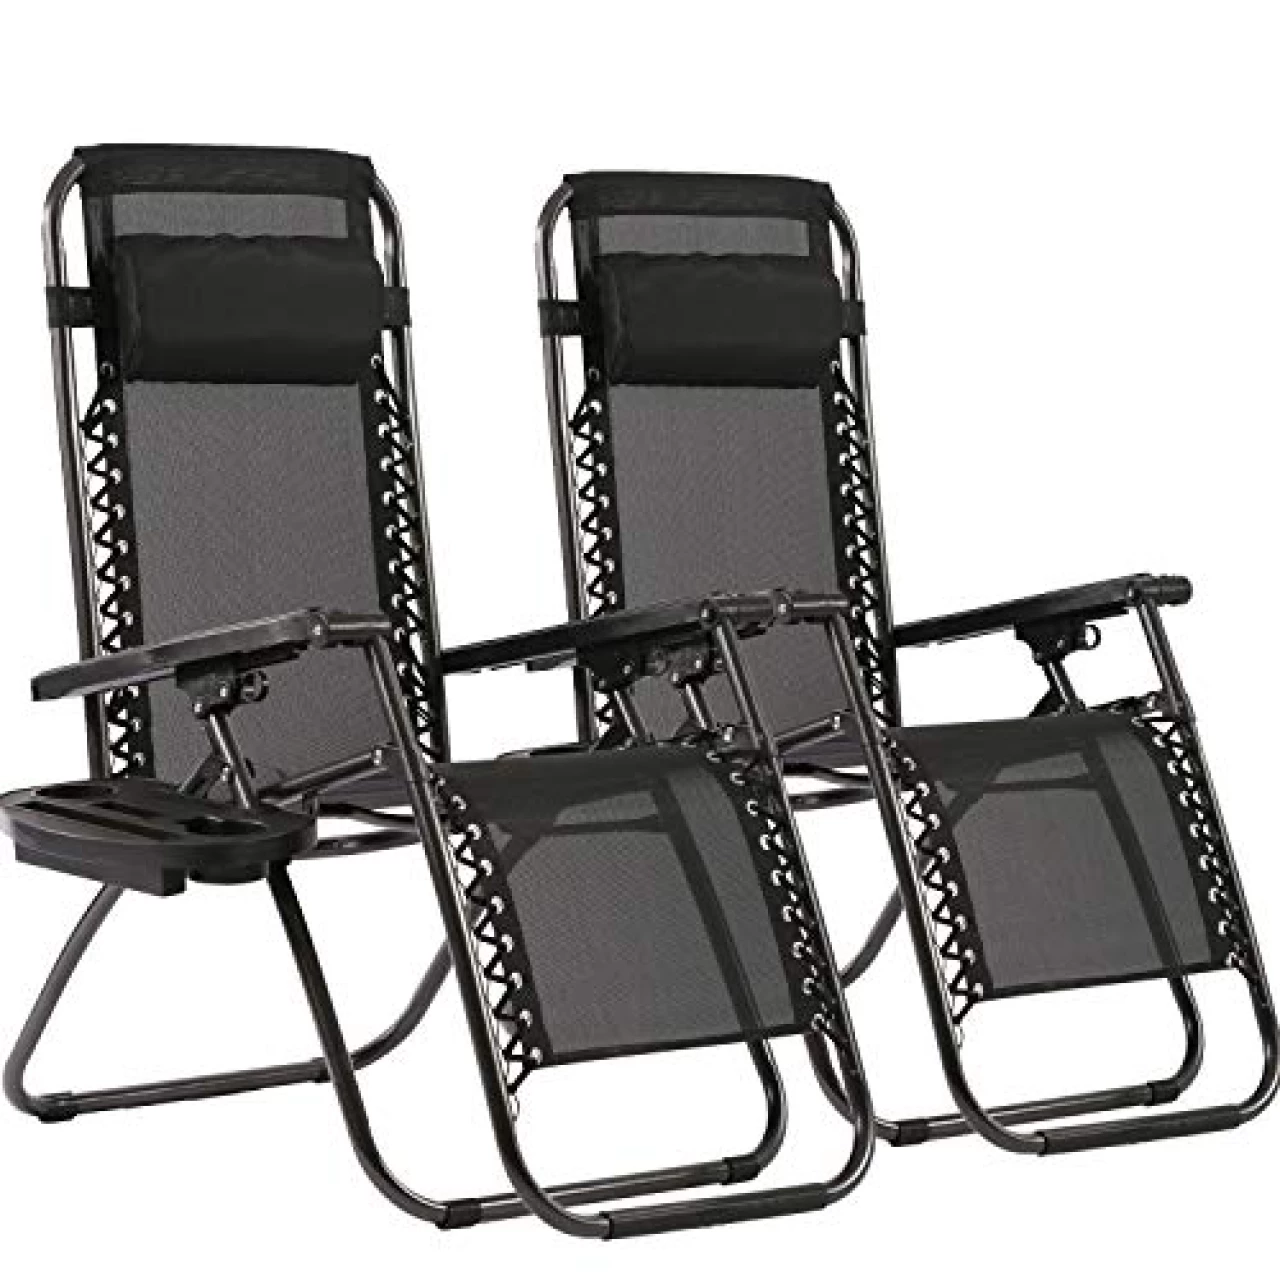 FDW Zero Gravity Chairs Patio Chairs